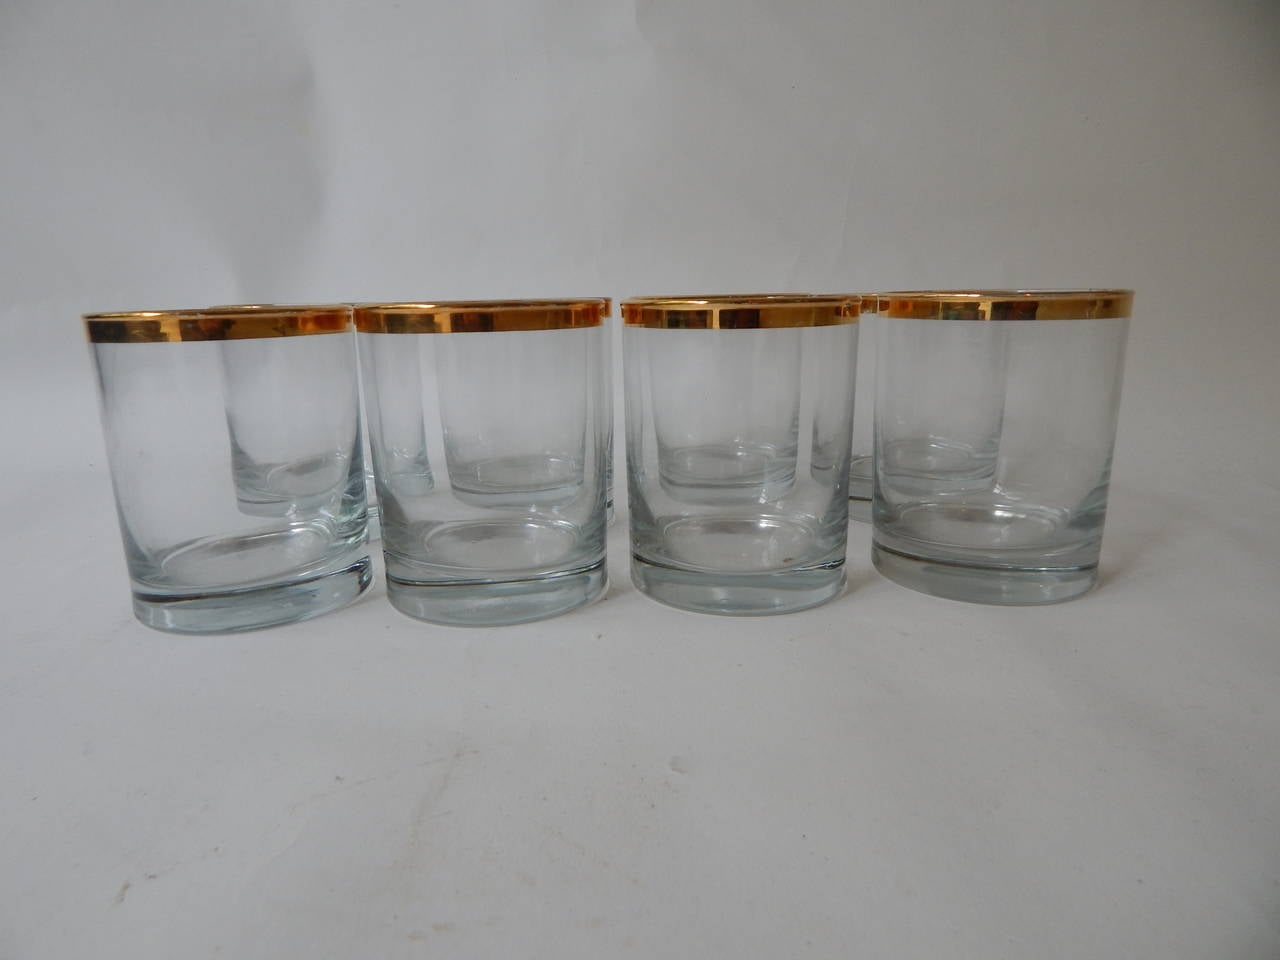 22k gold rimmed glasses designed by Dorothy Thorpe. Marking on bottom of each glass.